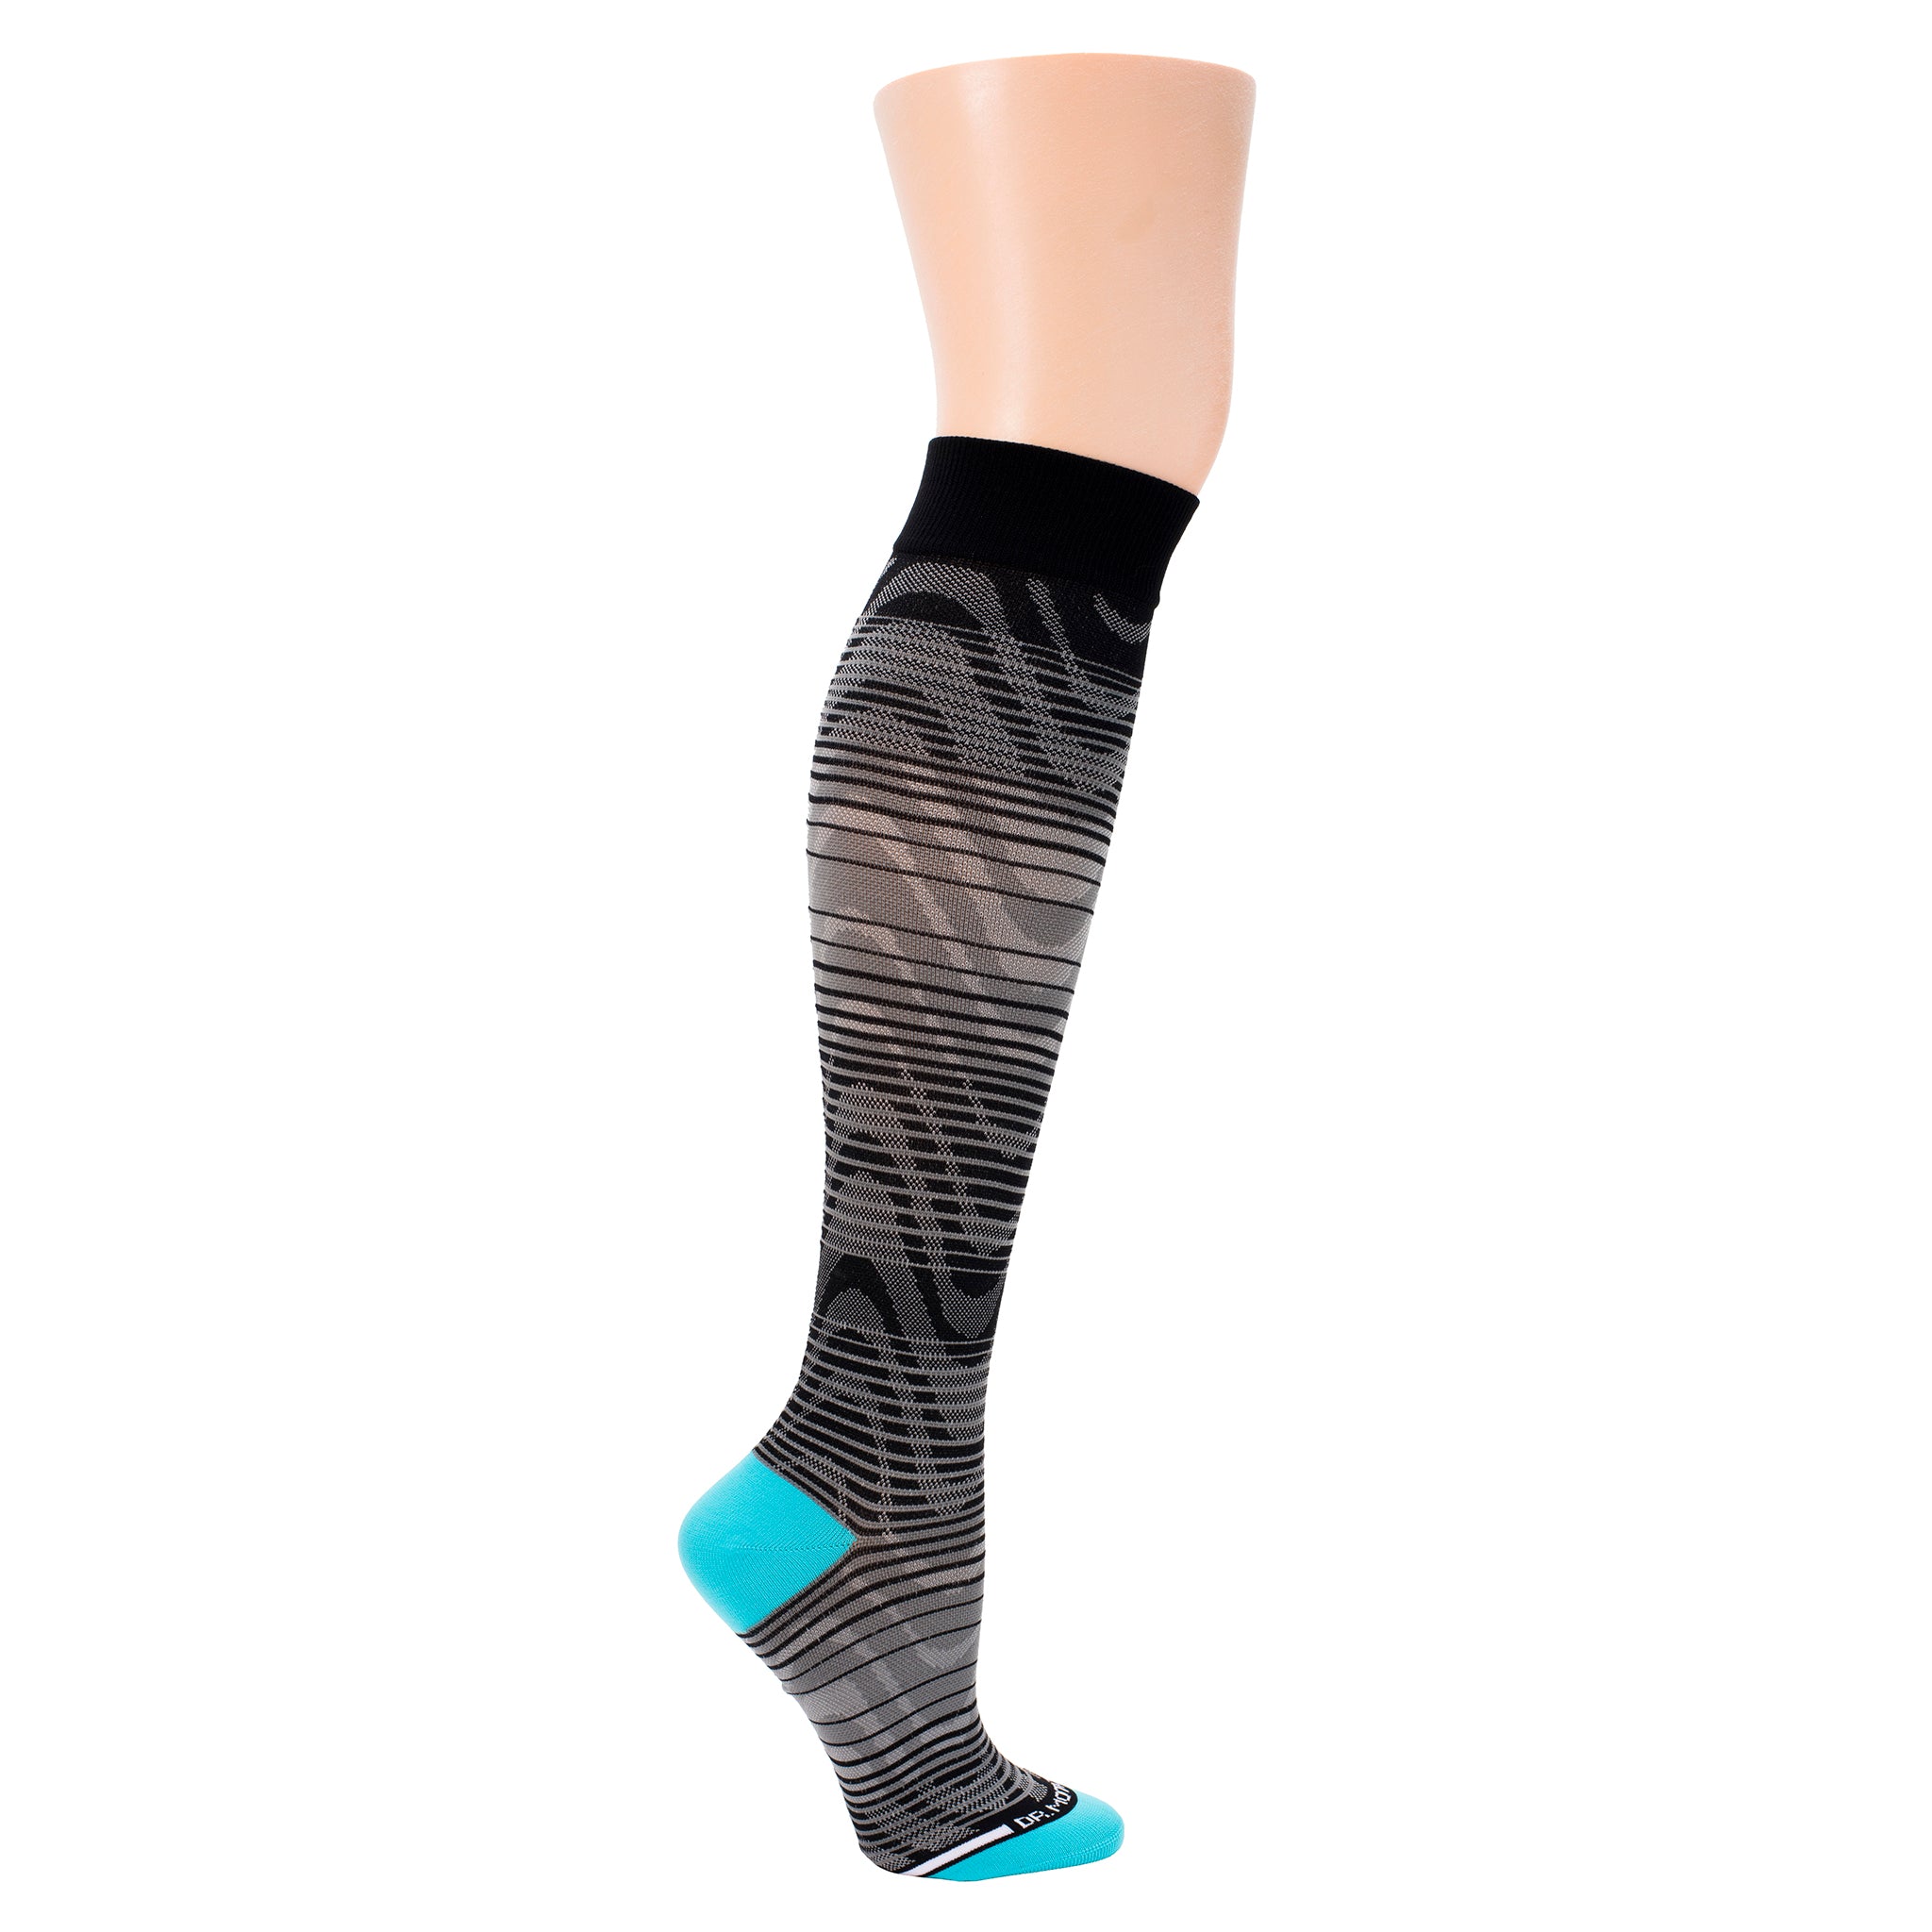 Order premium sports socks with compression